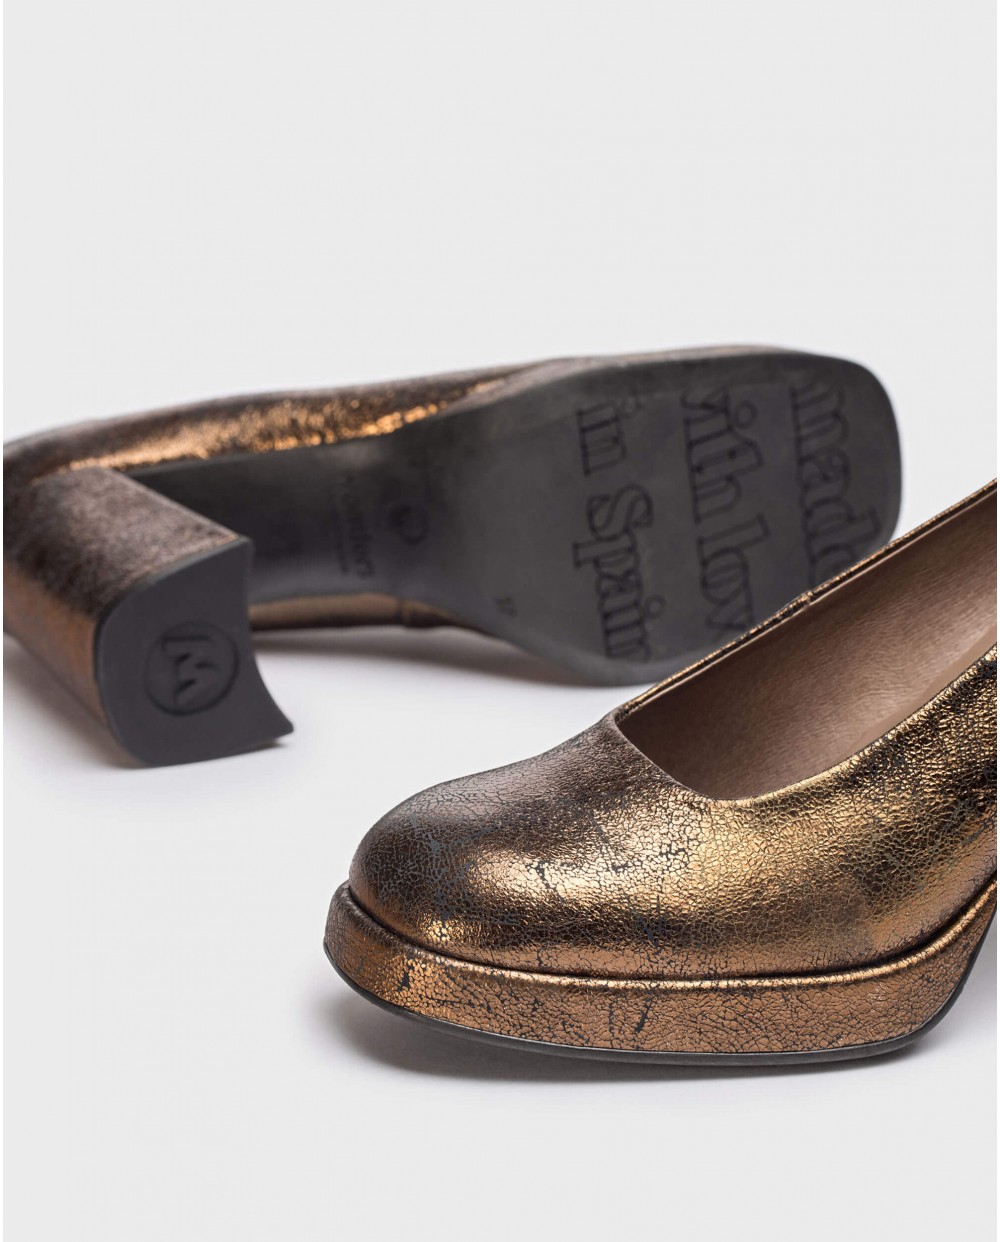 Wonders-Heels-Gold CAPTAIN high-heeled shoe